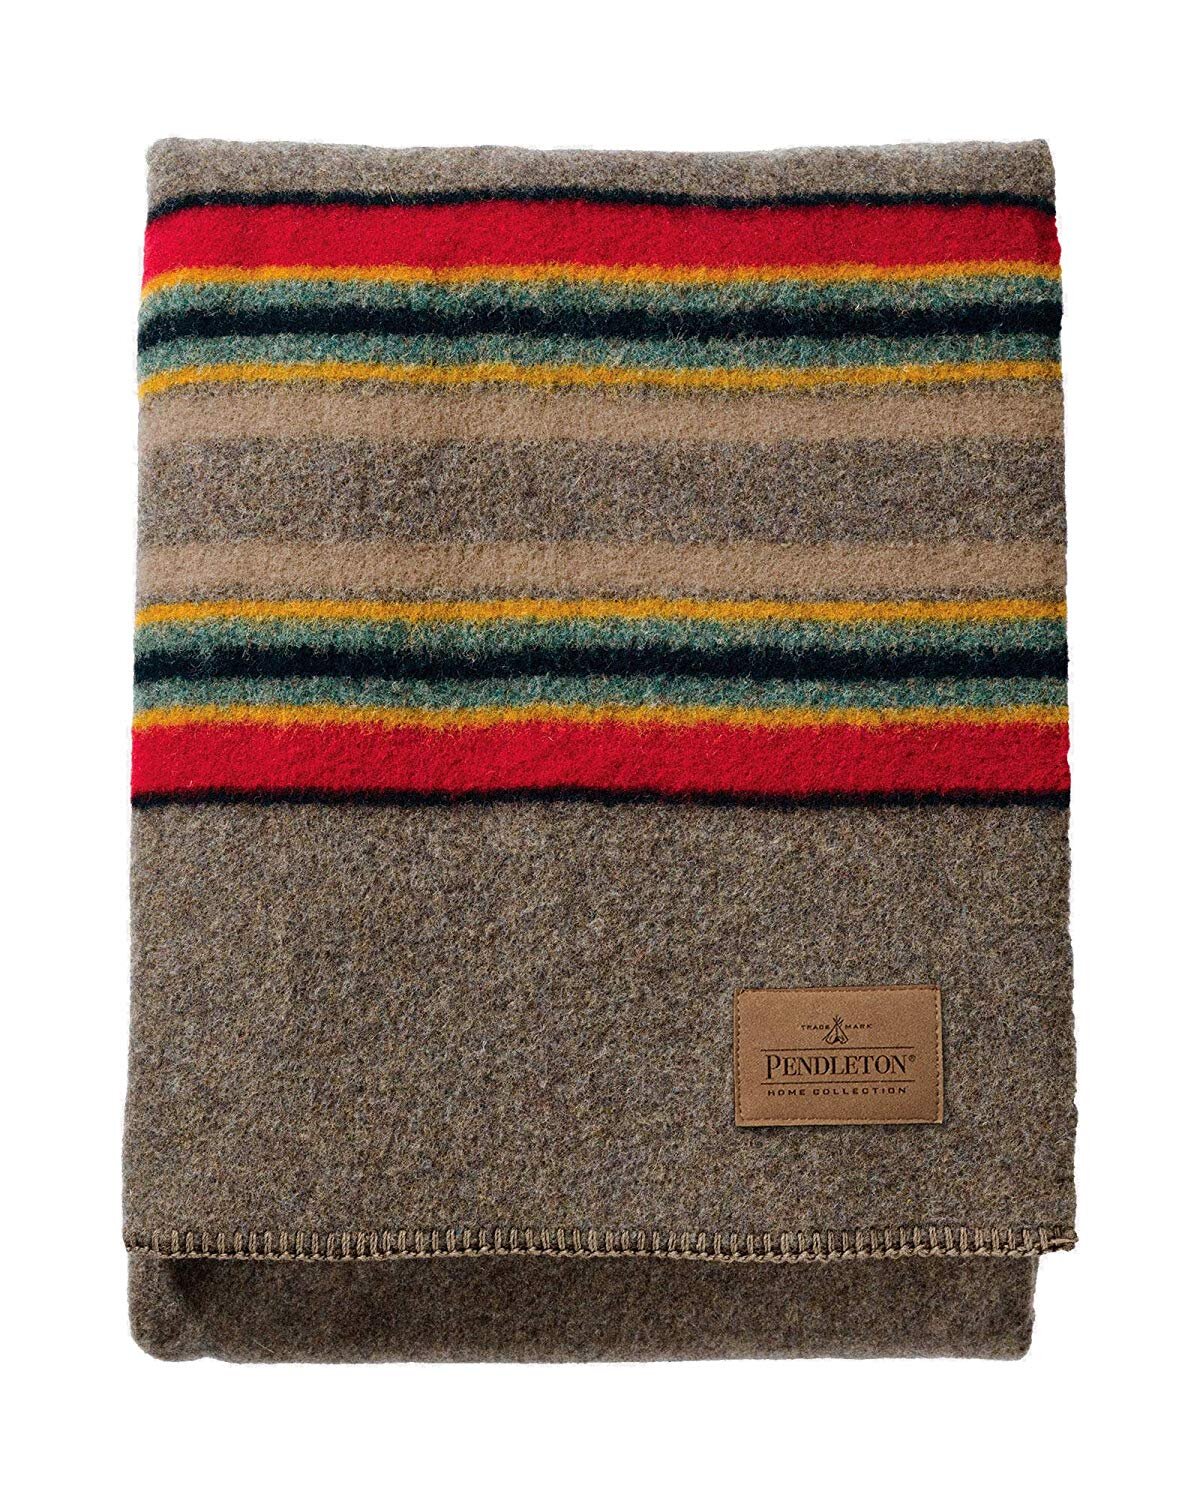 Pendelton Wool Blanket